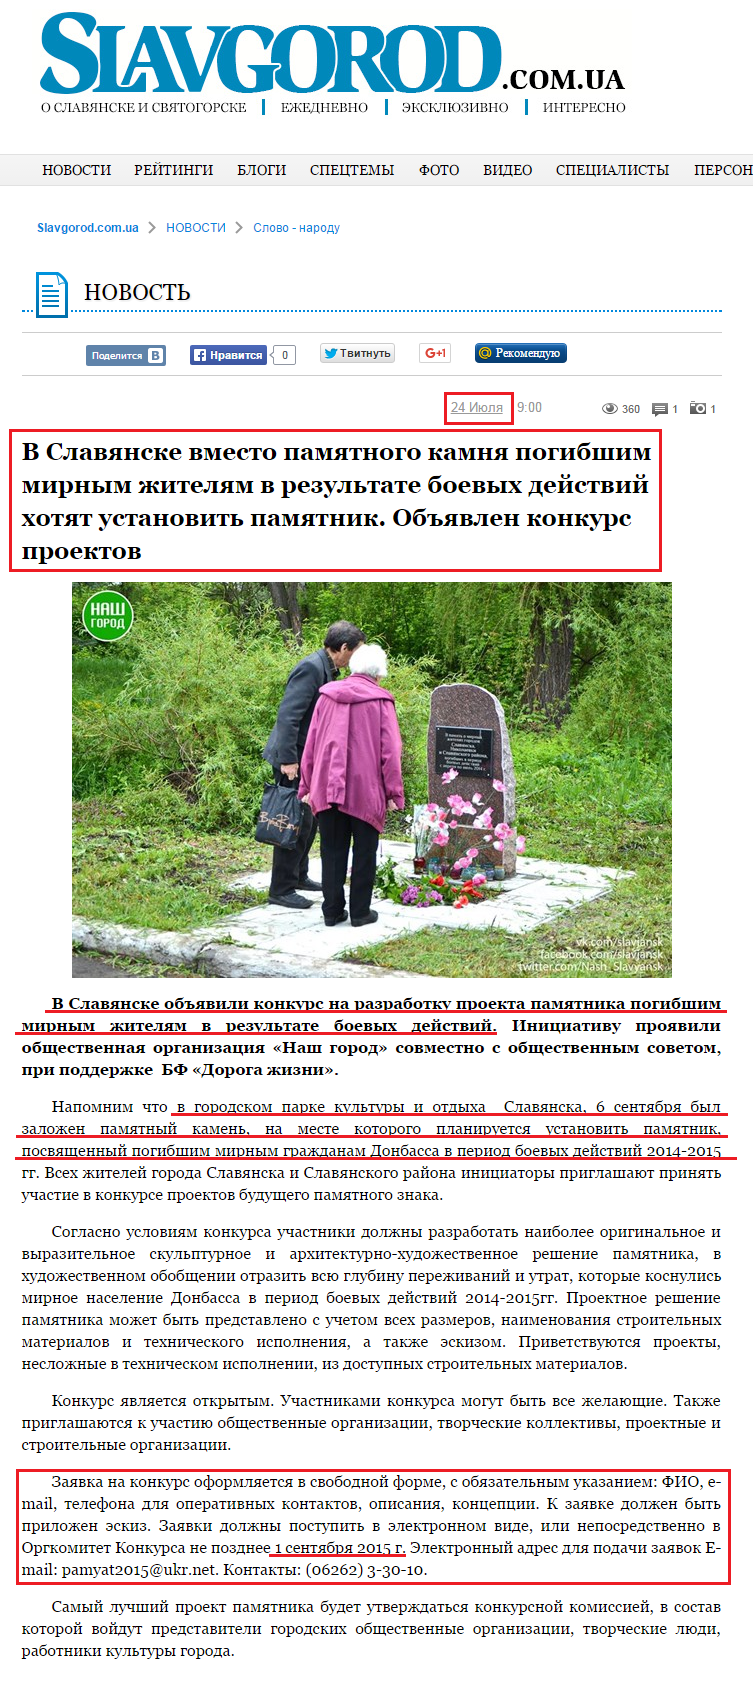 http://slavgorod.com.ua/News/Article/2751